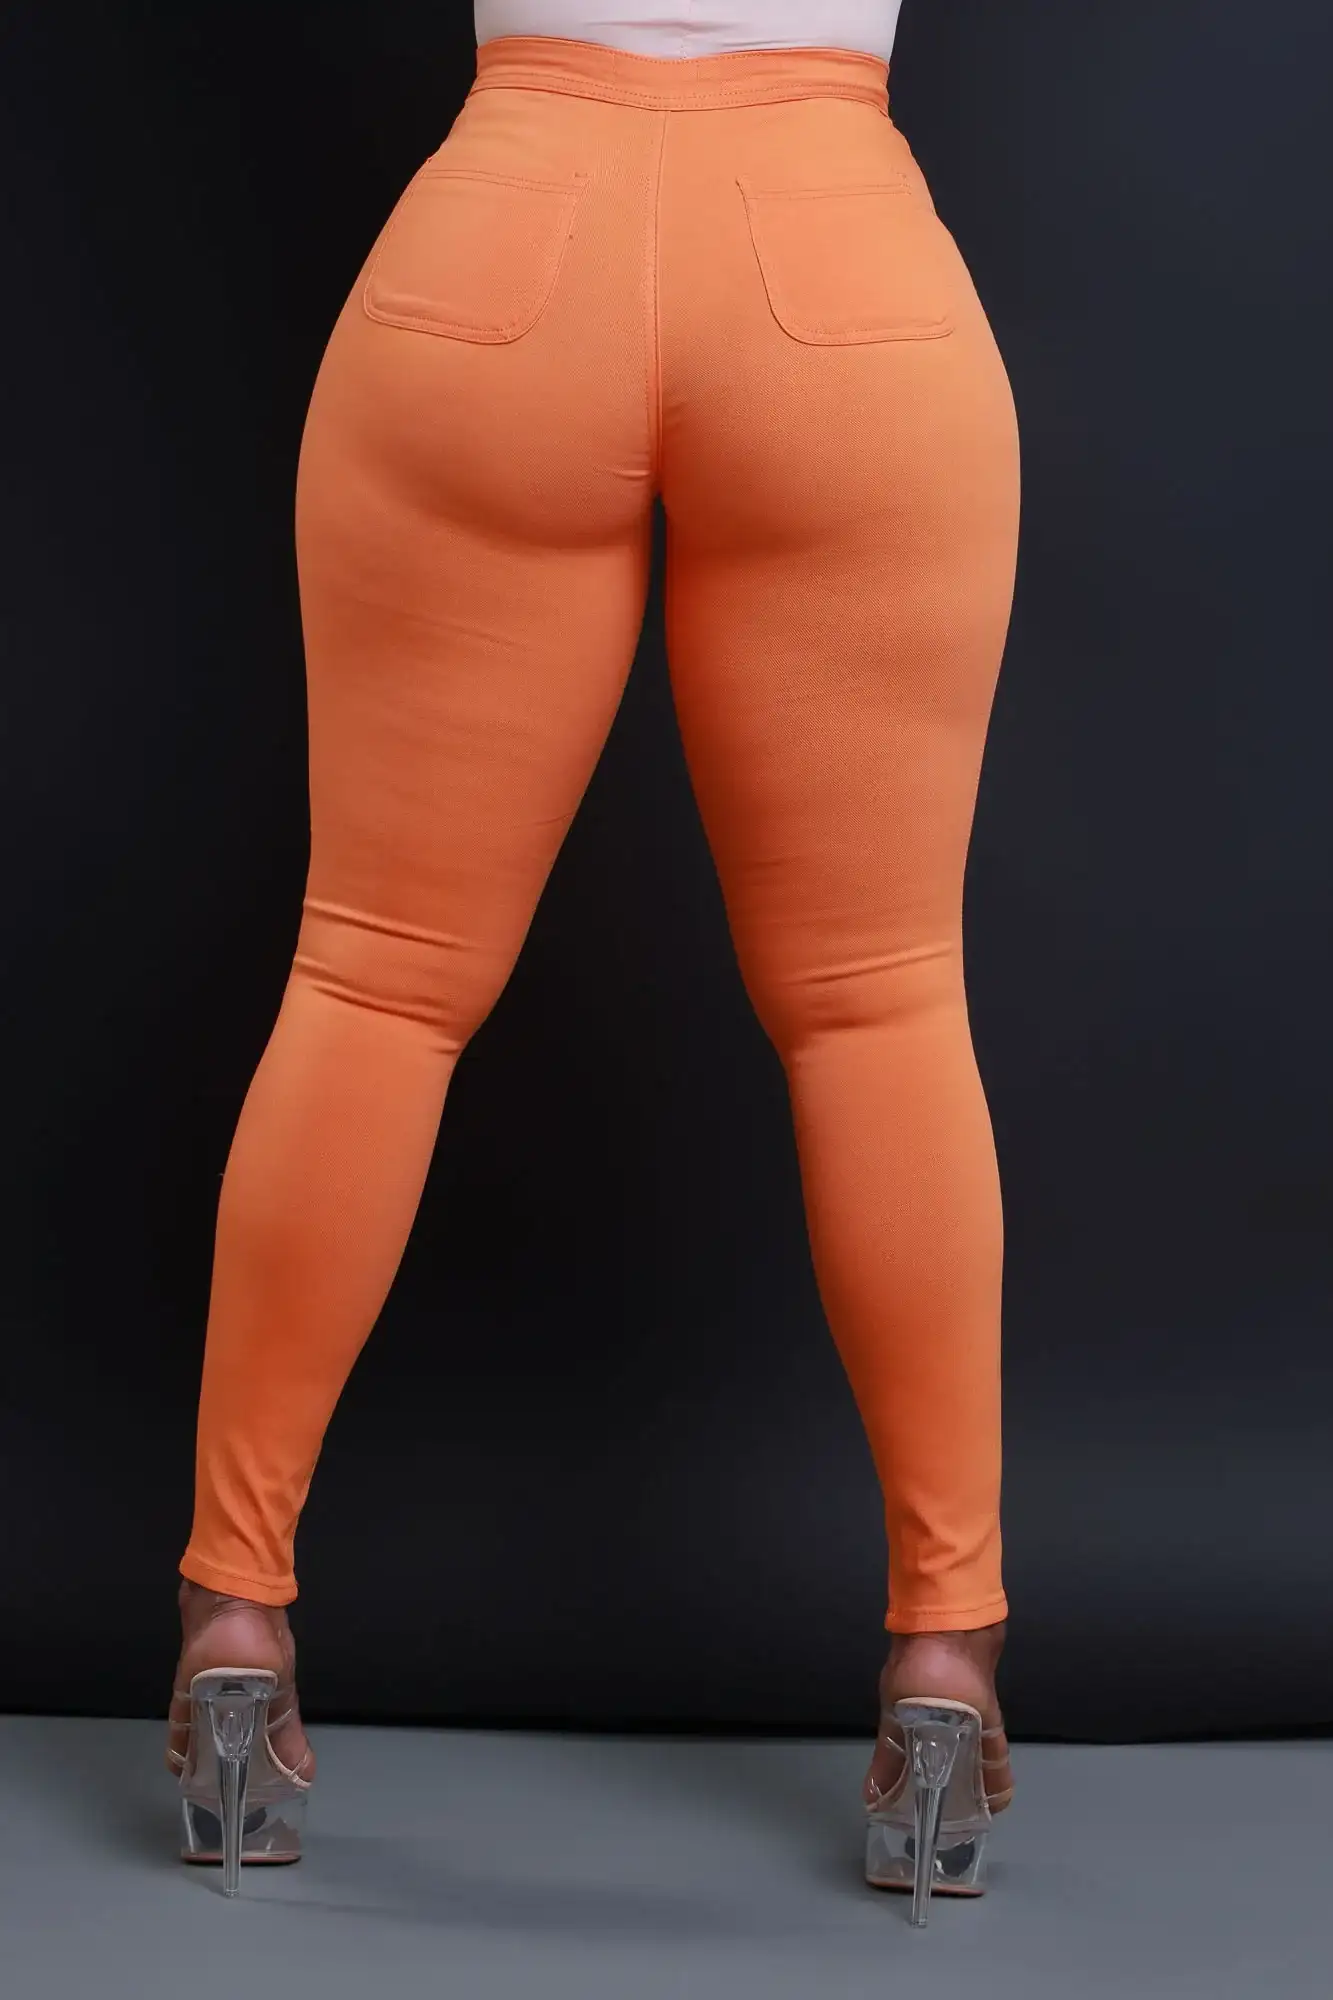 Image of \\$15.99 Super Swank High Waist Stretchy Jeans - Orange